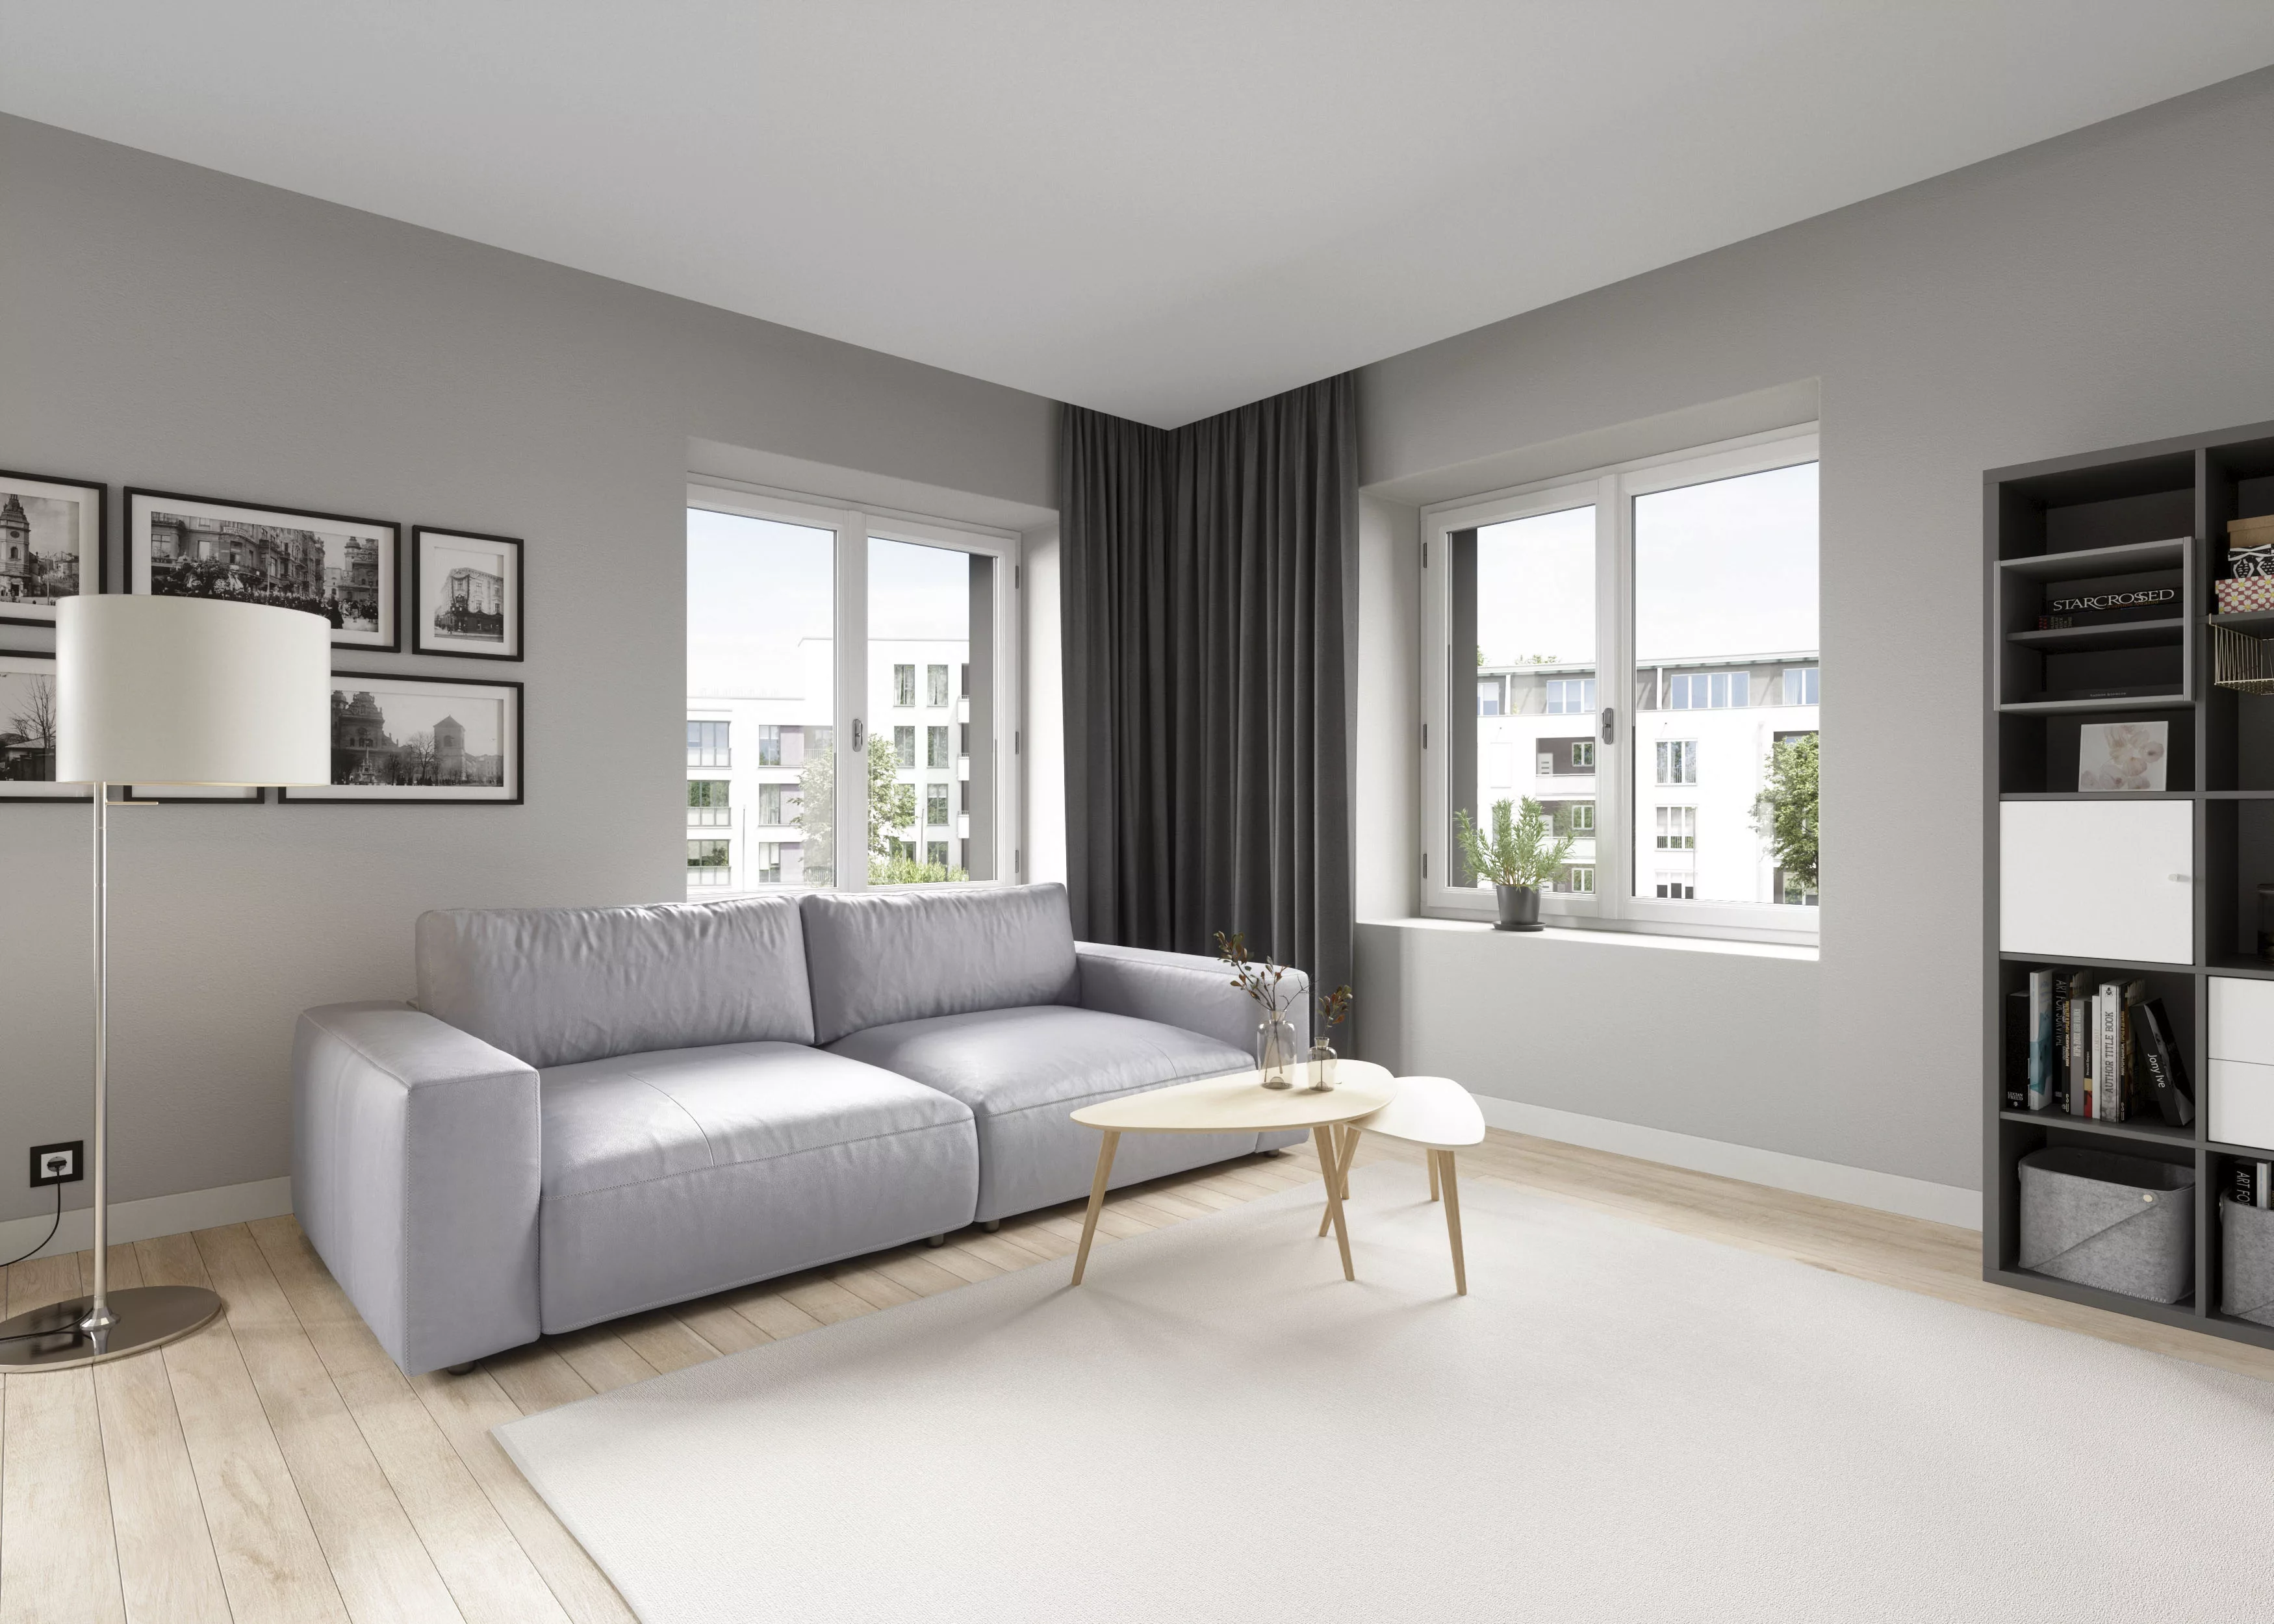 GALLERY M branded by Musterring Big-Sofa "LUCIA" günstig online kaufen